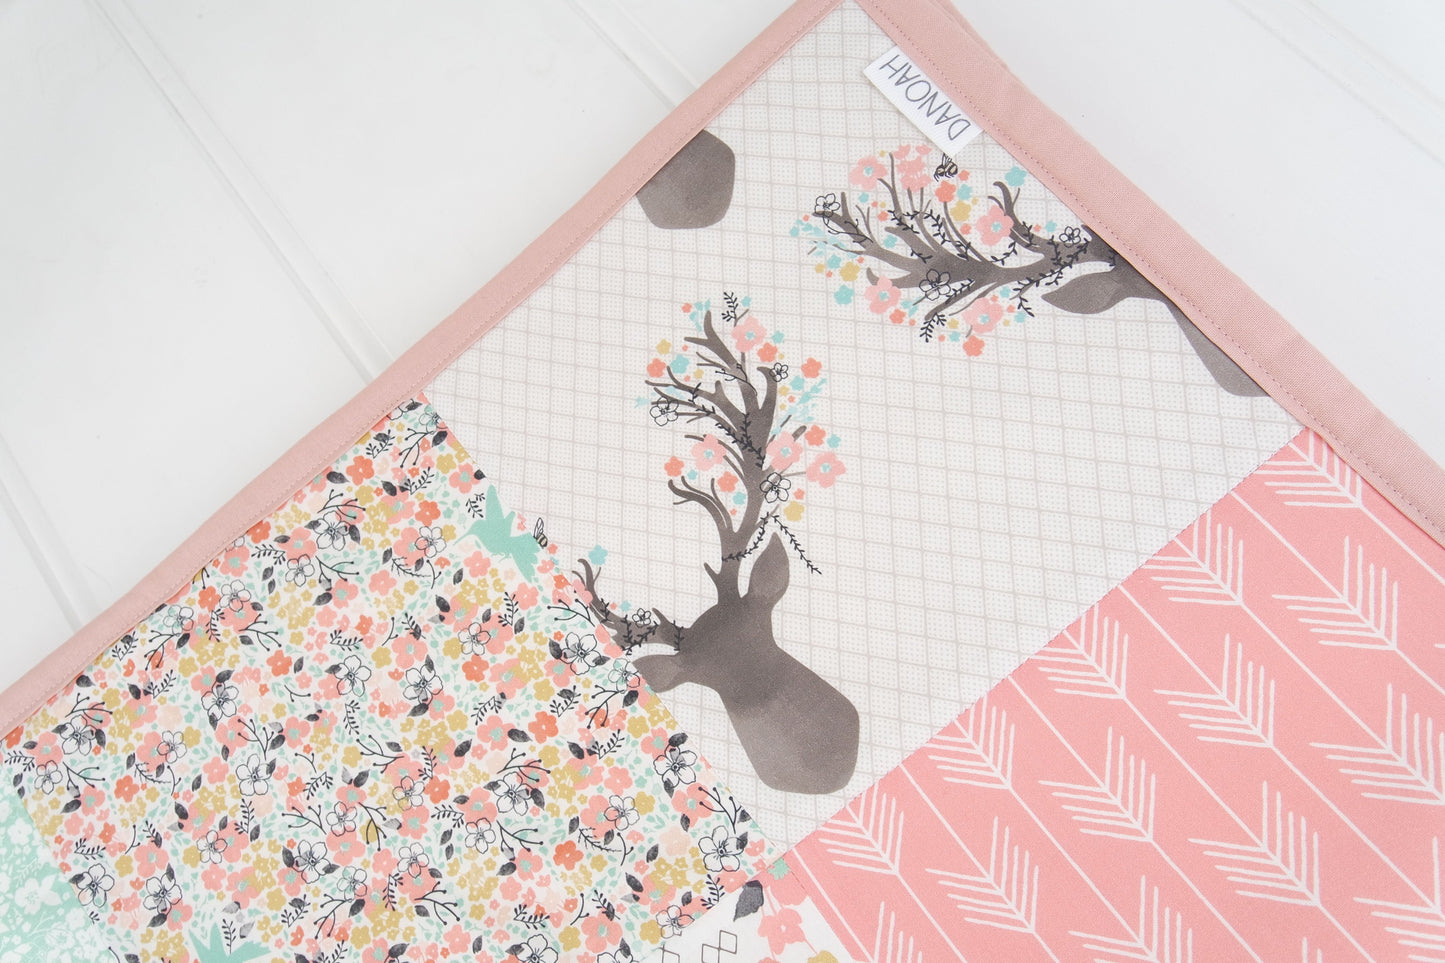 Pink & Mint Deer Patchwork Quilt